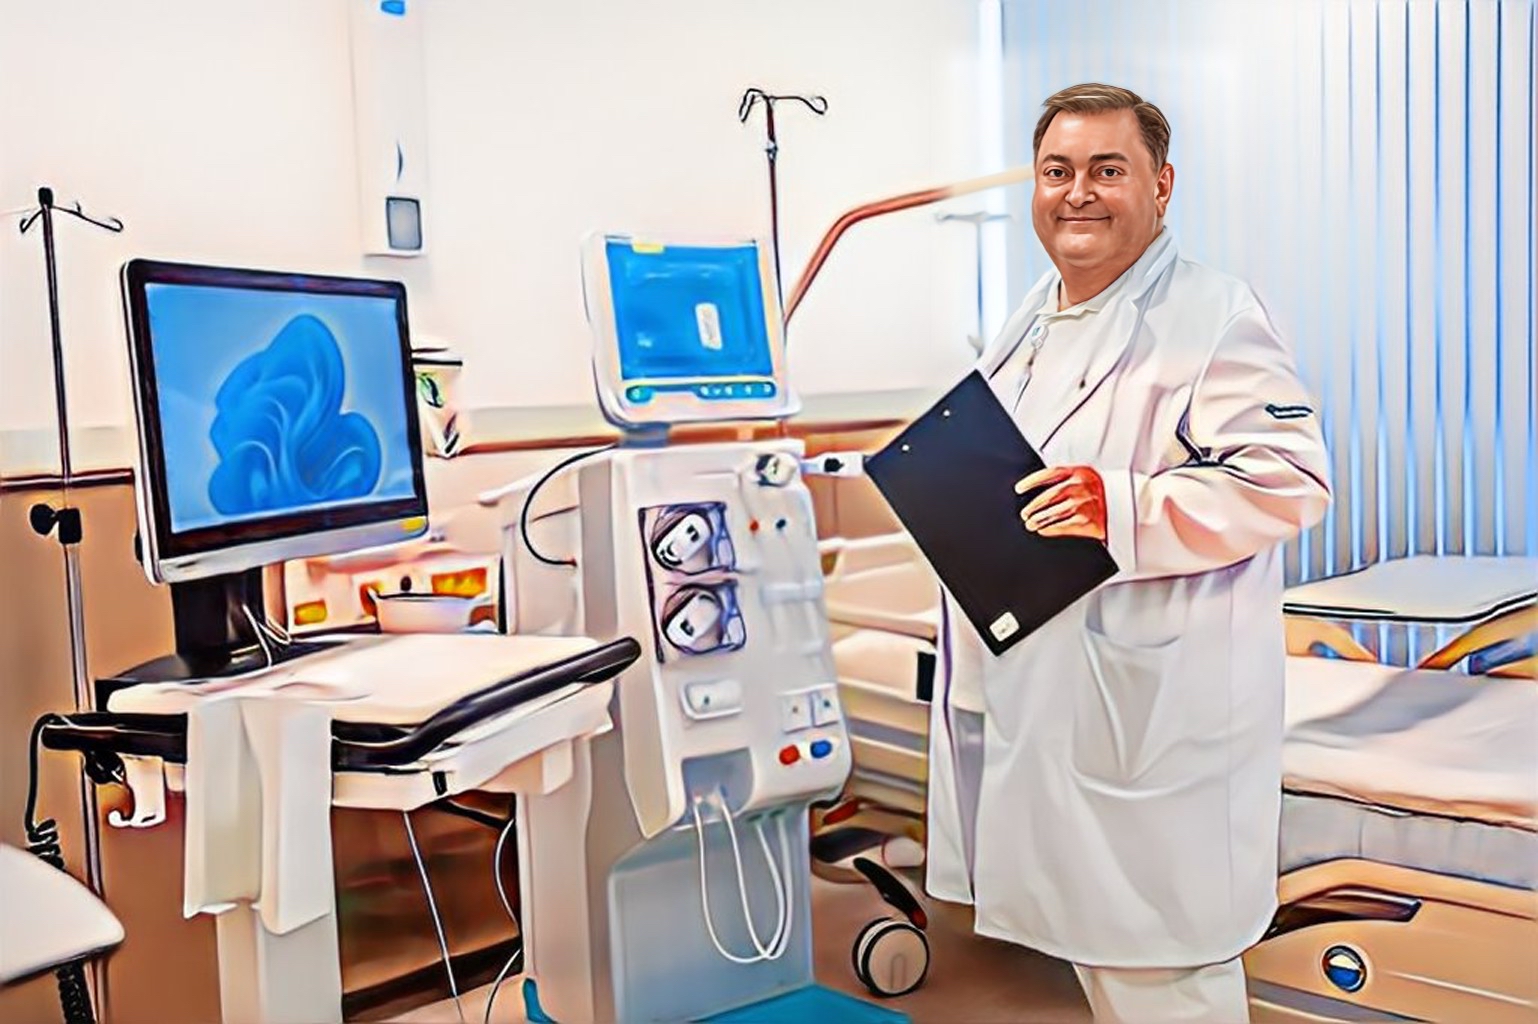 Lubomir Polascin, MD at BORY HOSPITAL, Bratislava